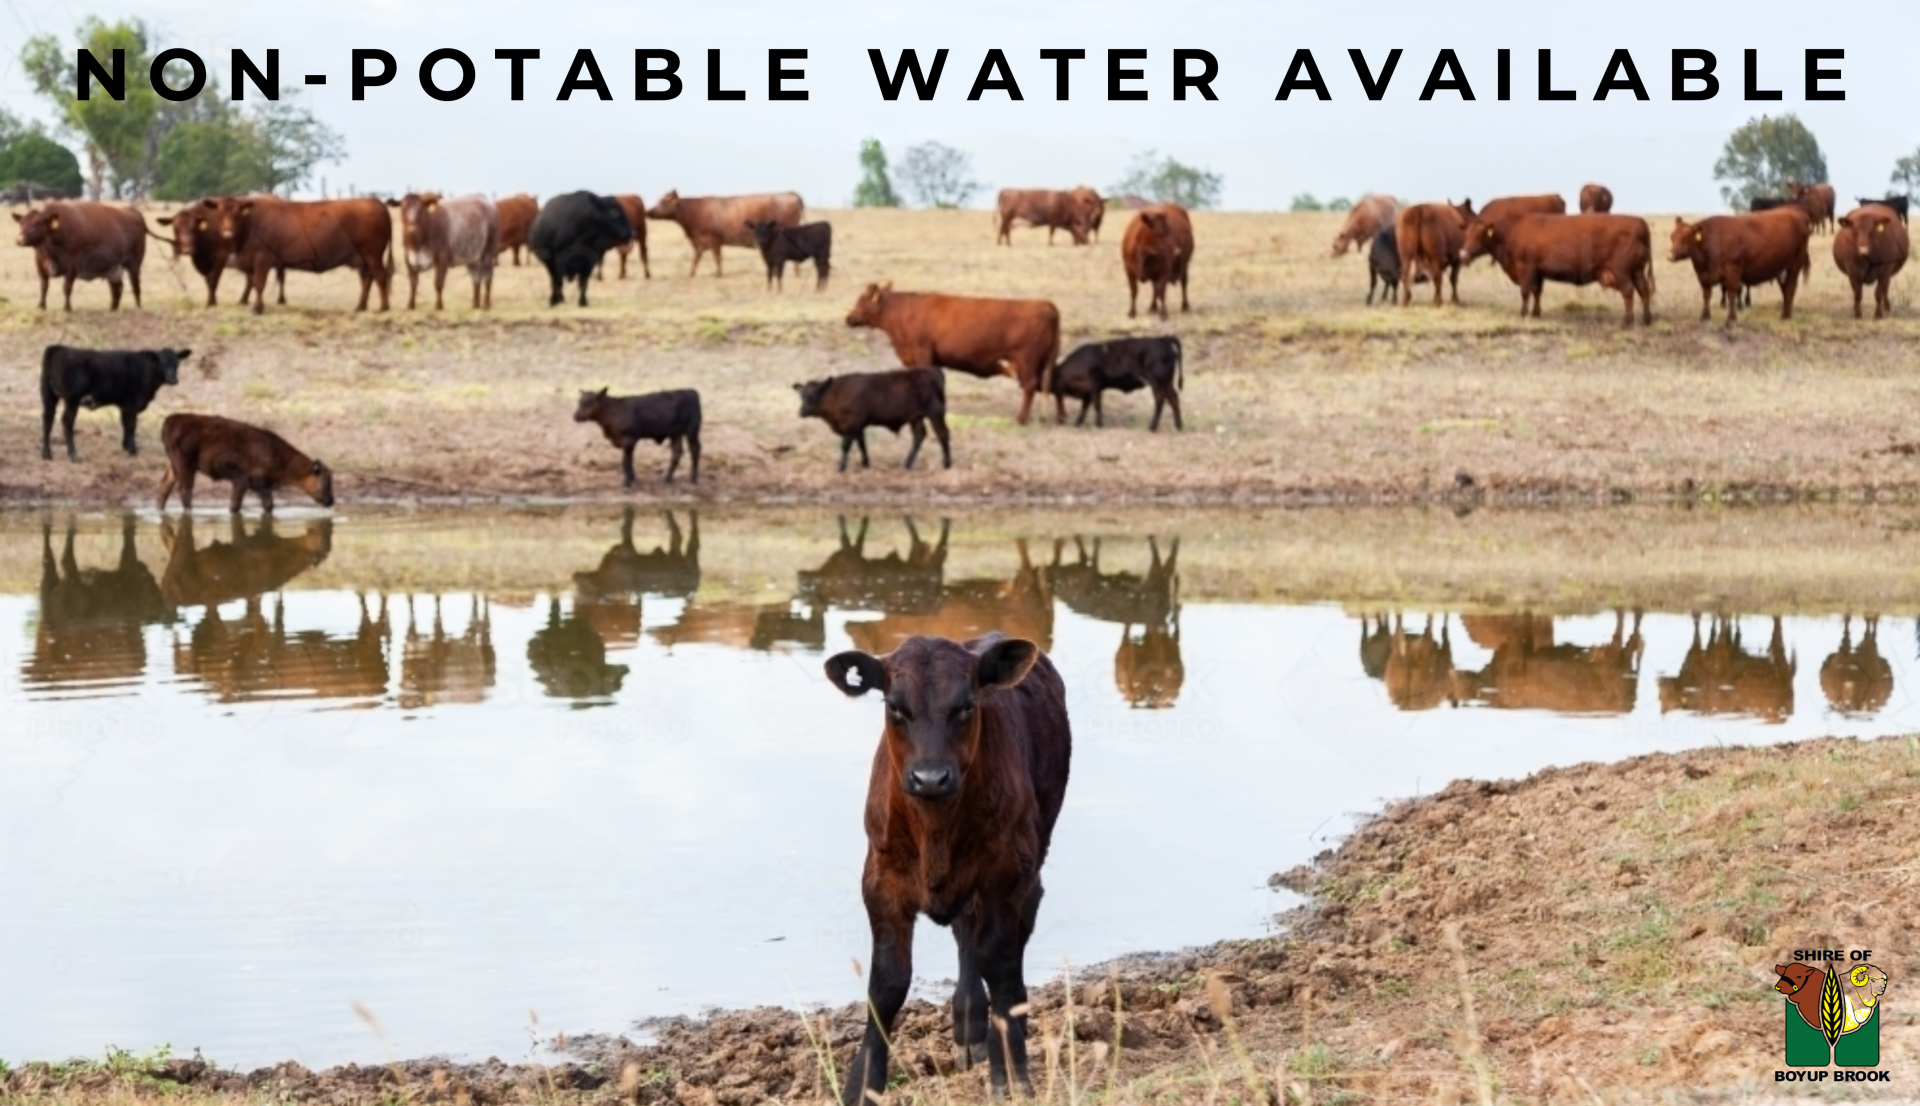 Non-potable water available